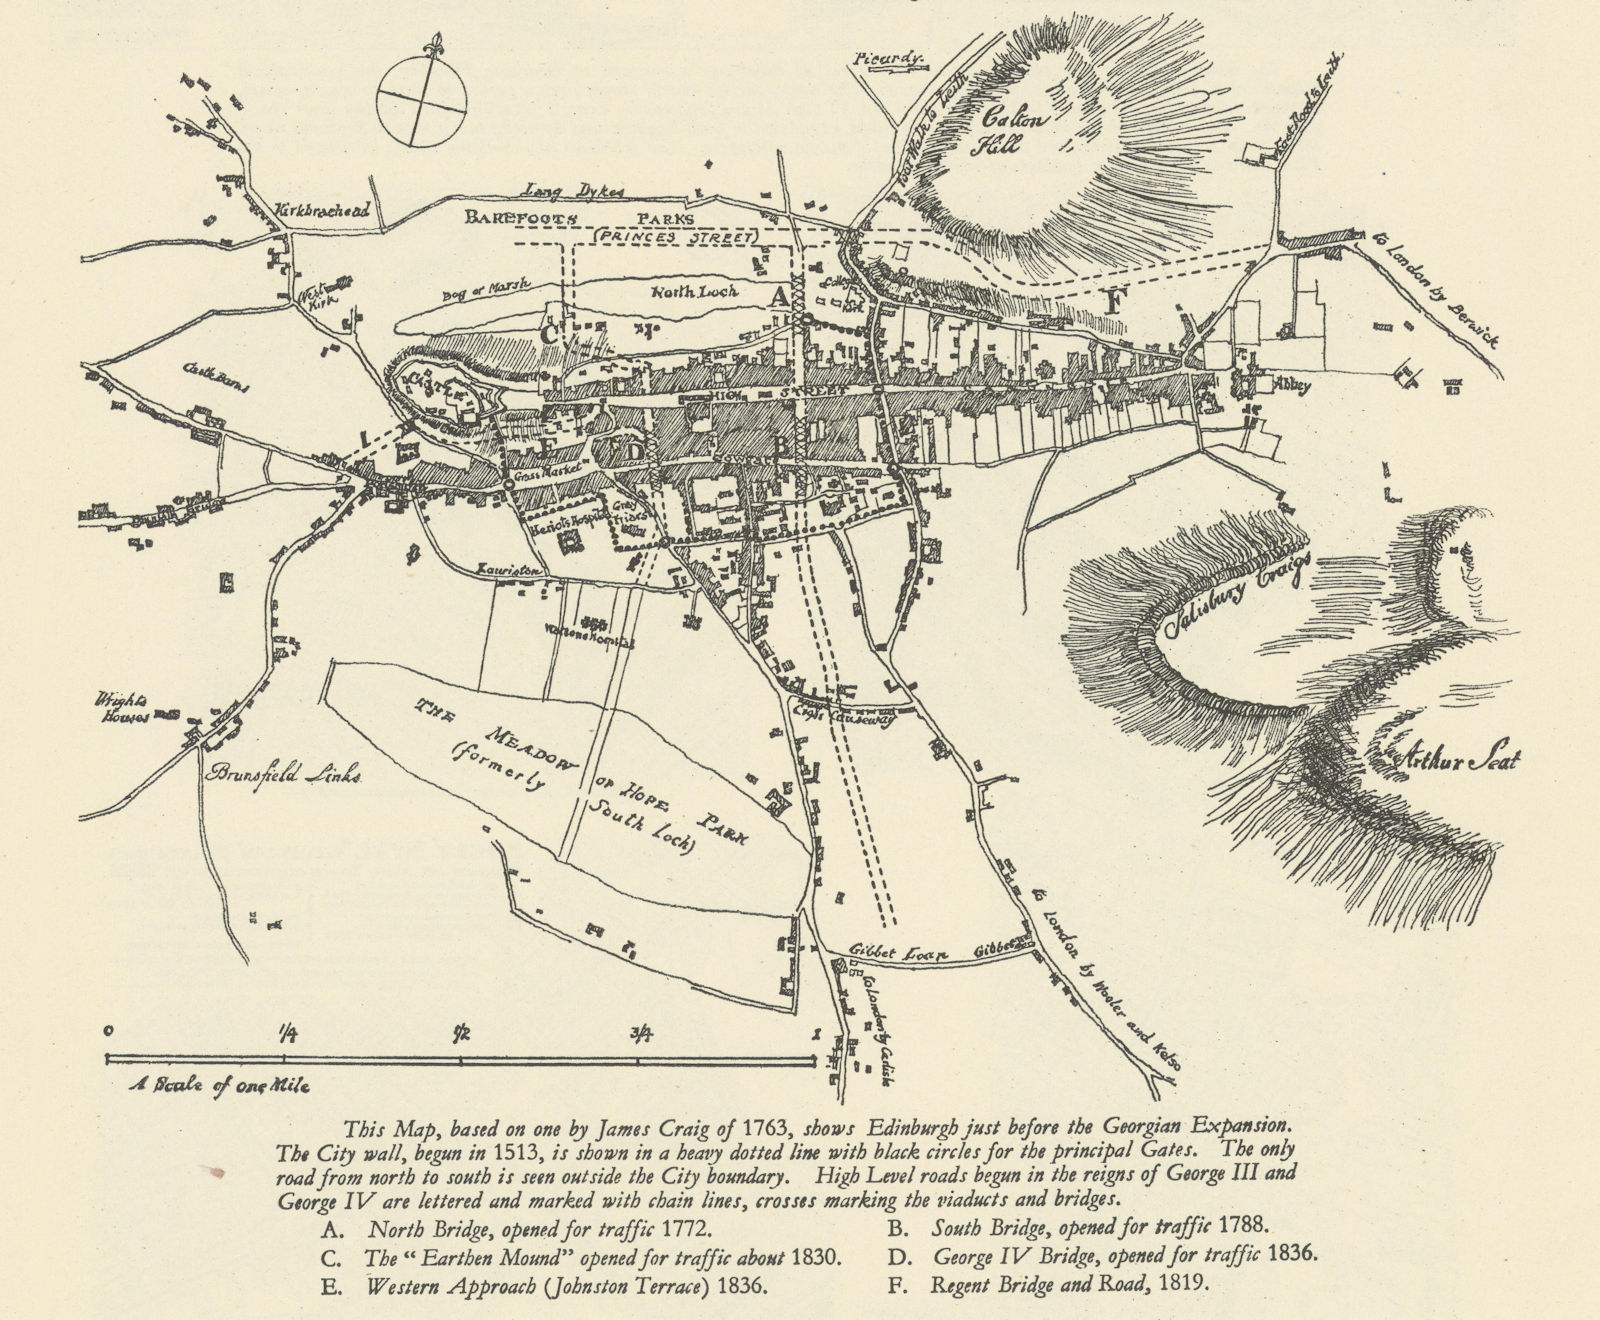 Associate Product Sketch map of Pre-Georgian Edinburgh after James Craig's 1763 map 1949 old